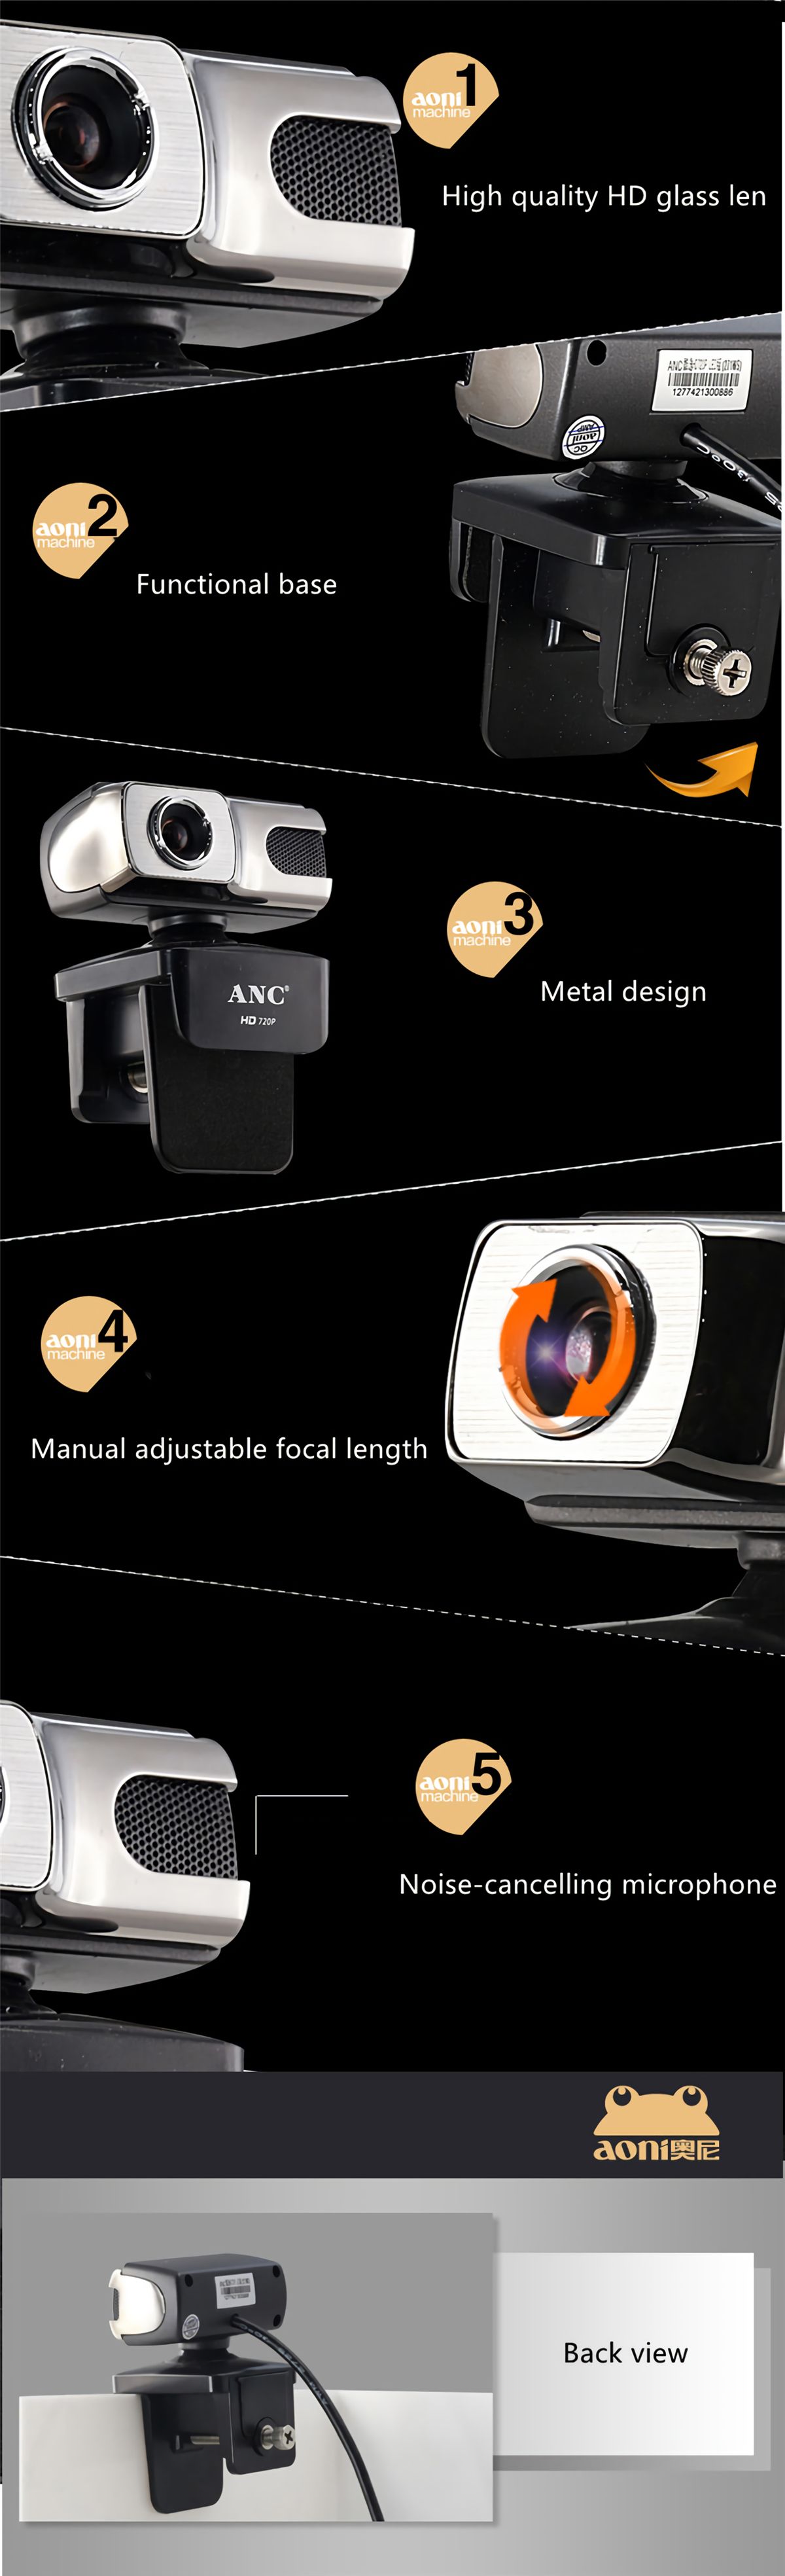 Aoni-ANC-HD-720P-Webcam-CMOS-30FPS-10-Million-Pixels-USB-20-HD-USB-Drive-free-Camera-Video-Call-Webc-1664921